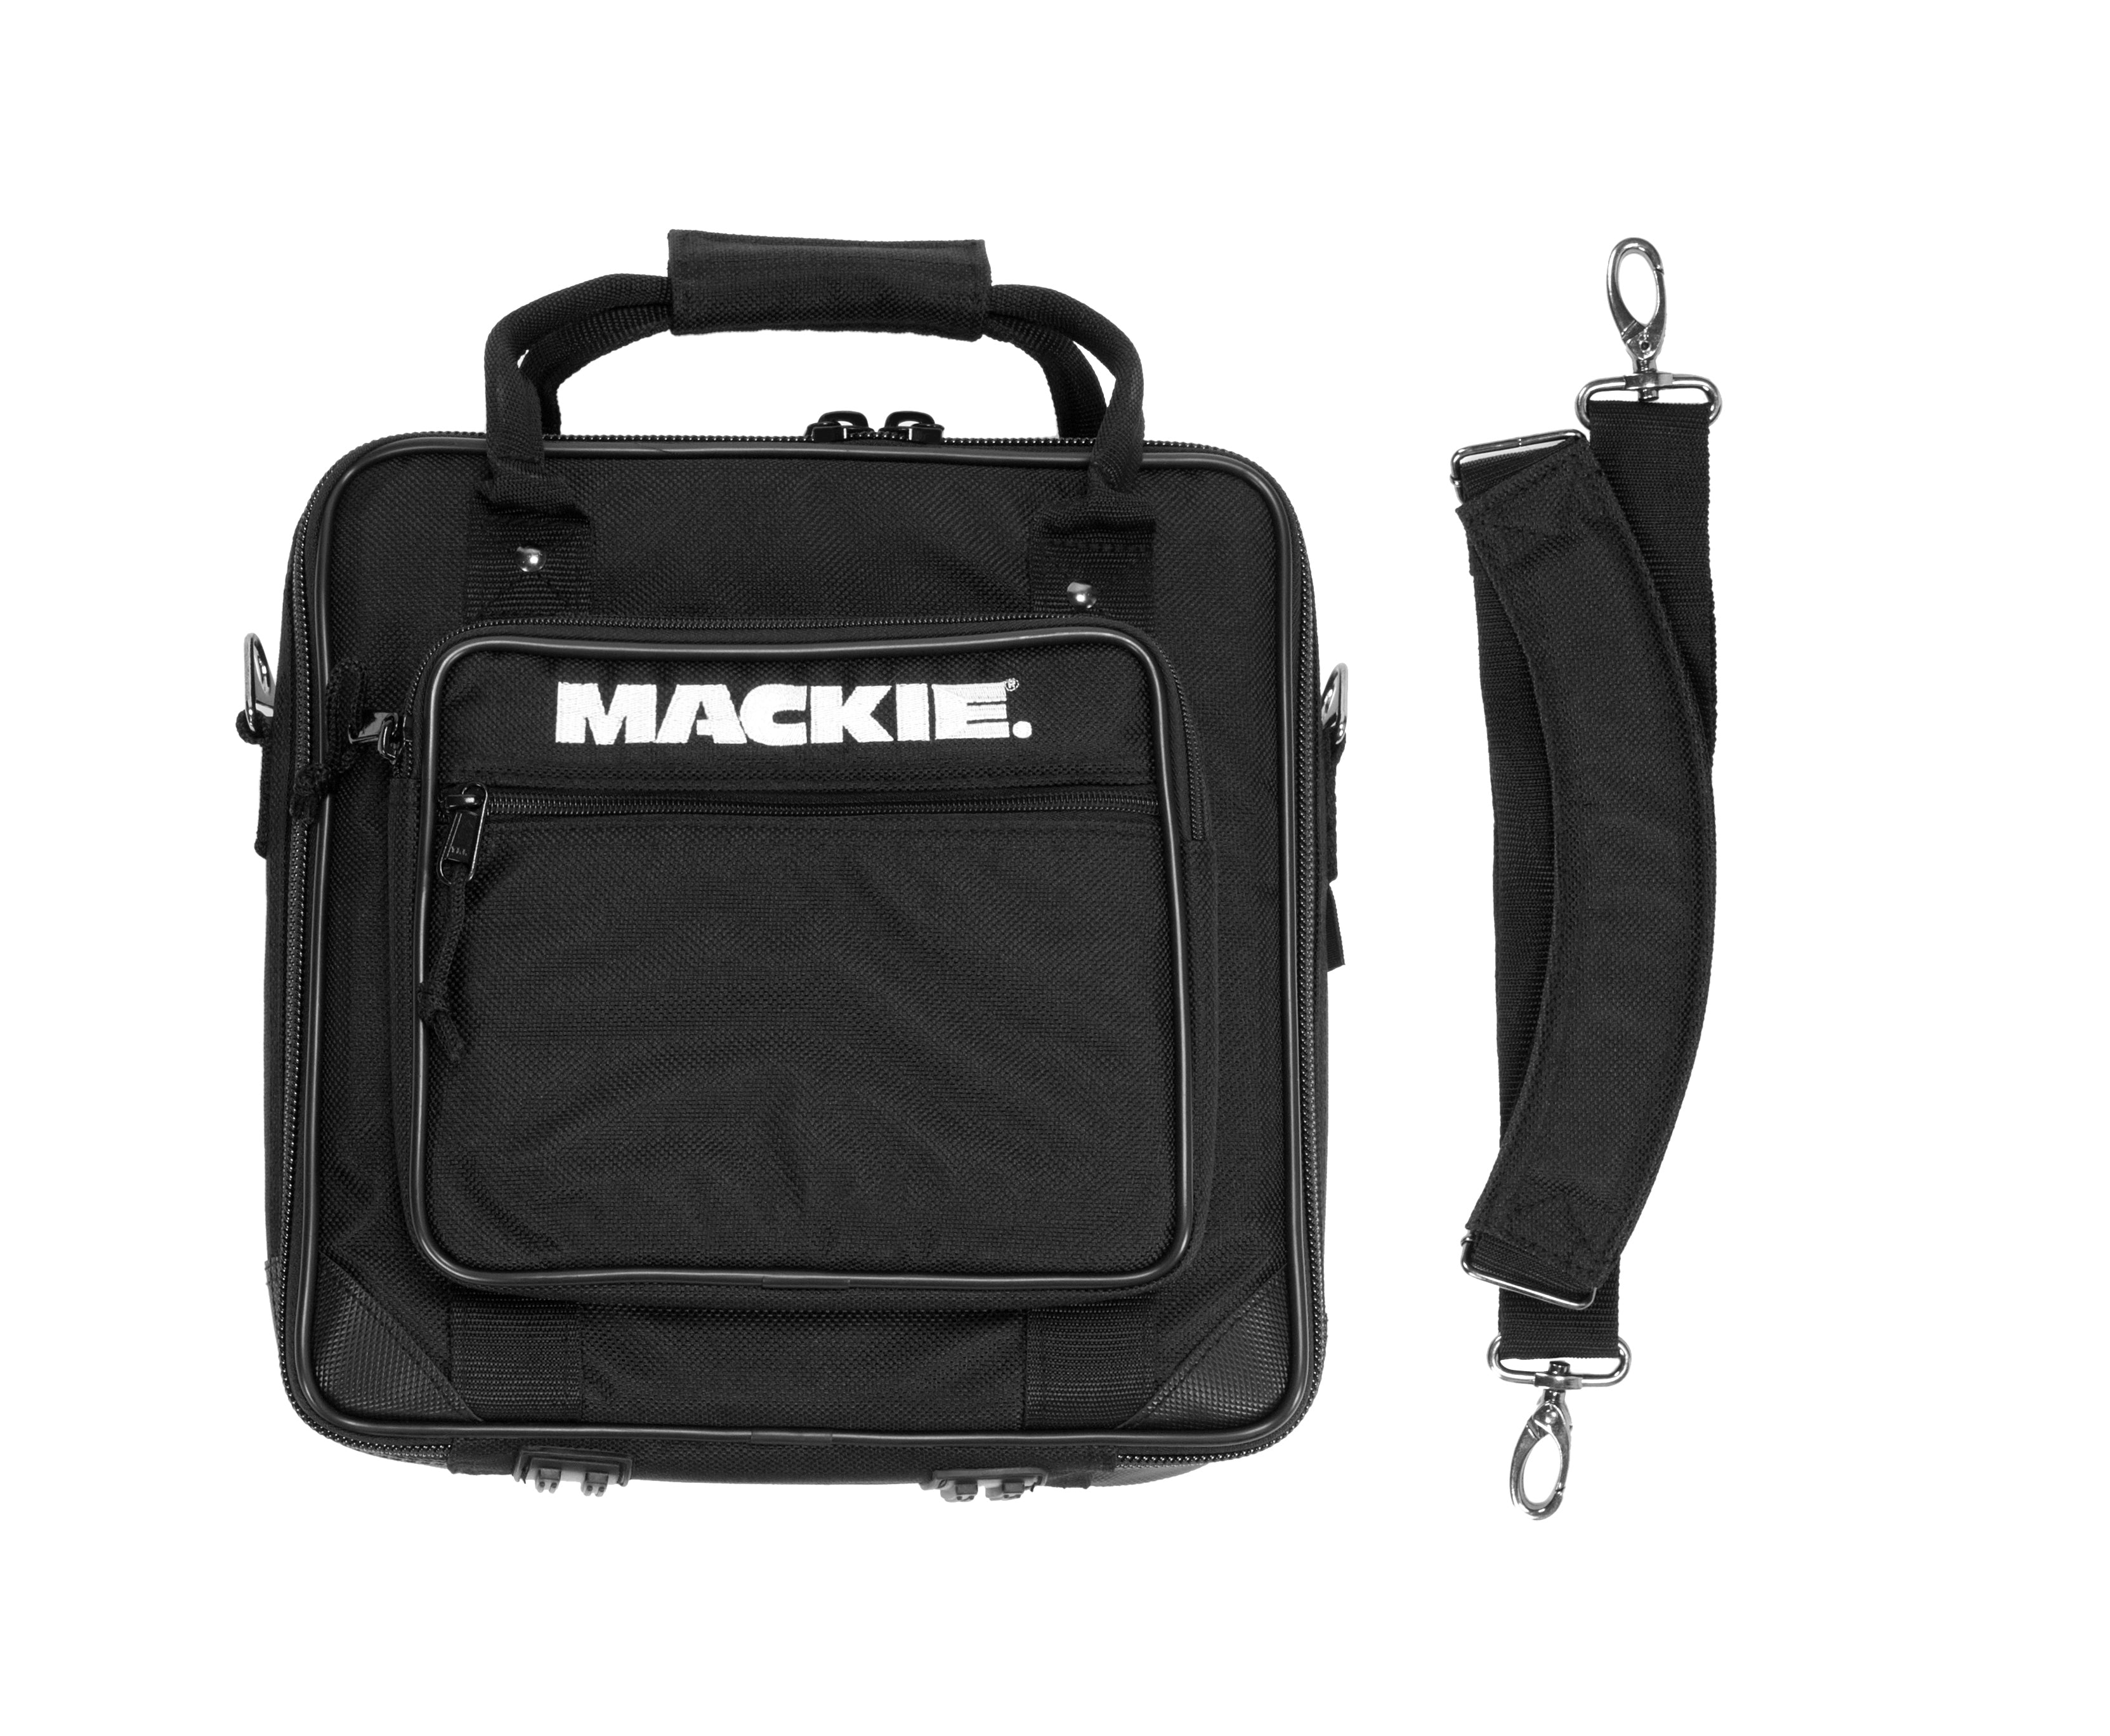 Mackie 1202-VLZ Bag